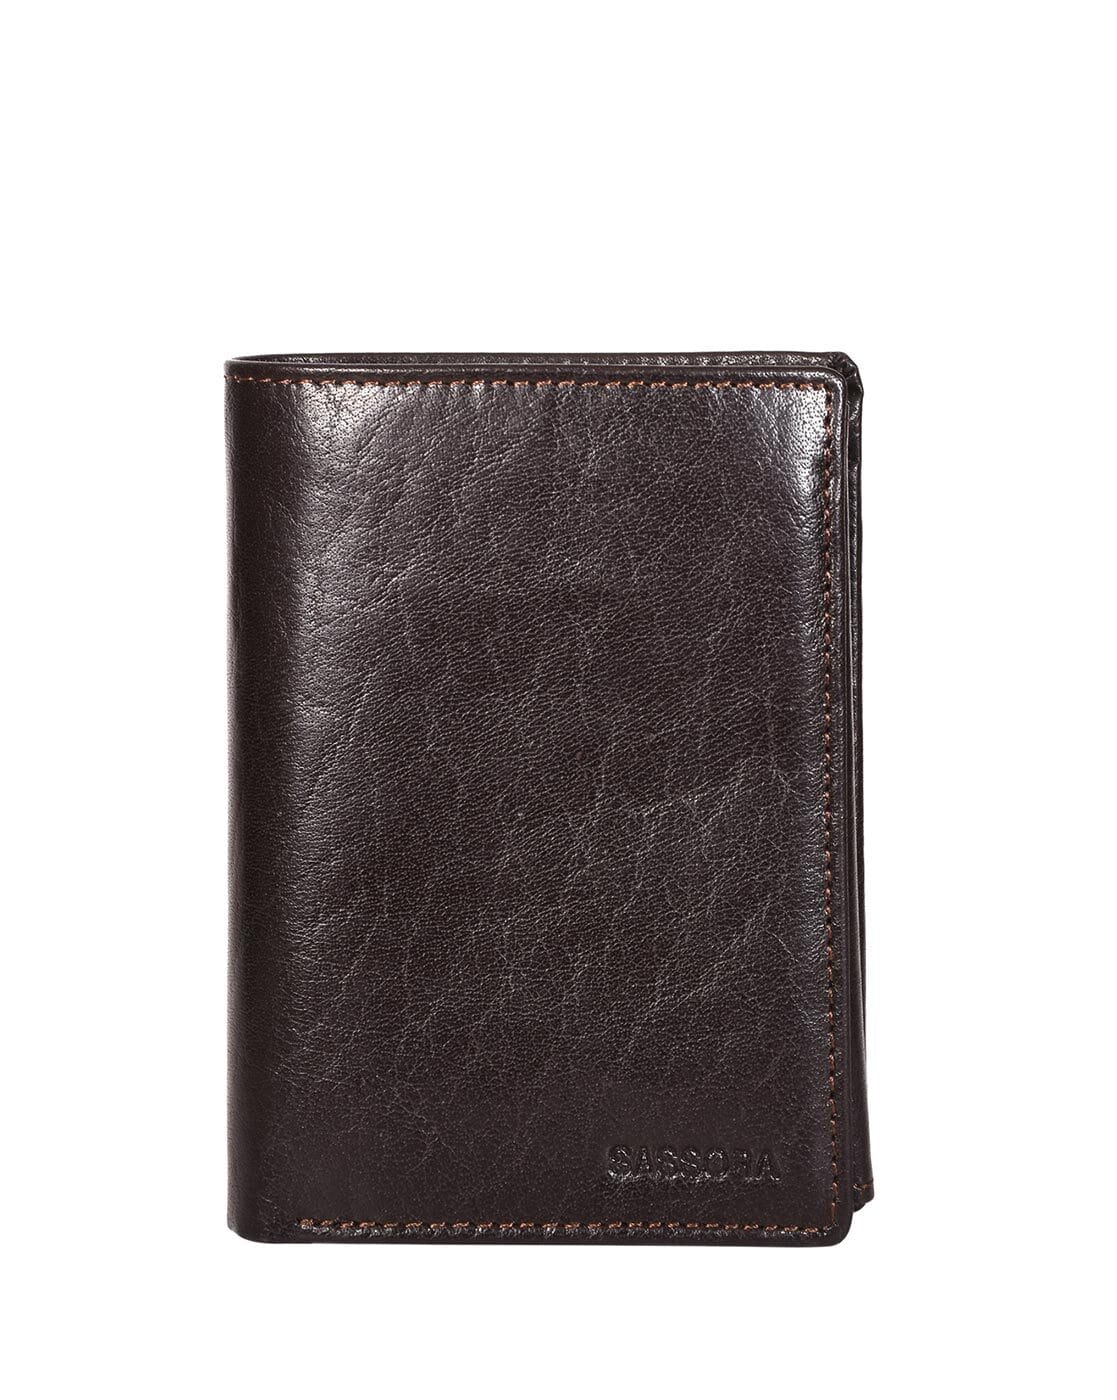 Buy Dangerous Threads Mens Black Leather Wallet Lamb Bifold Triple Window  #786 at Amazon.in